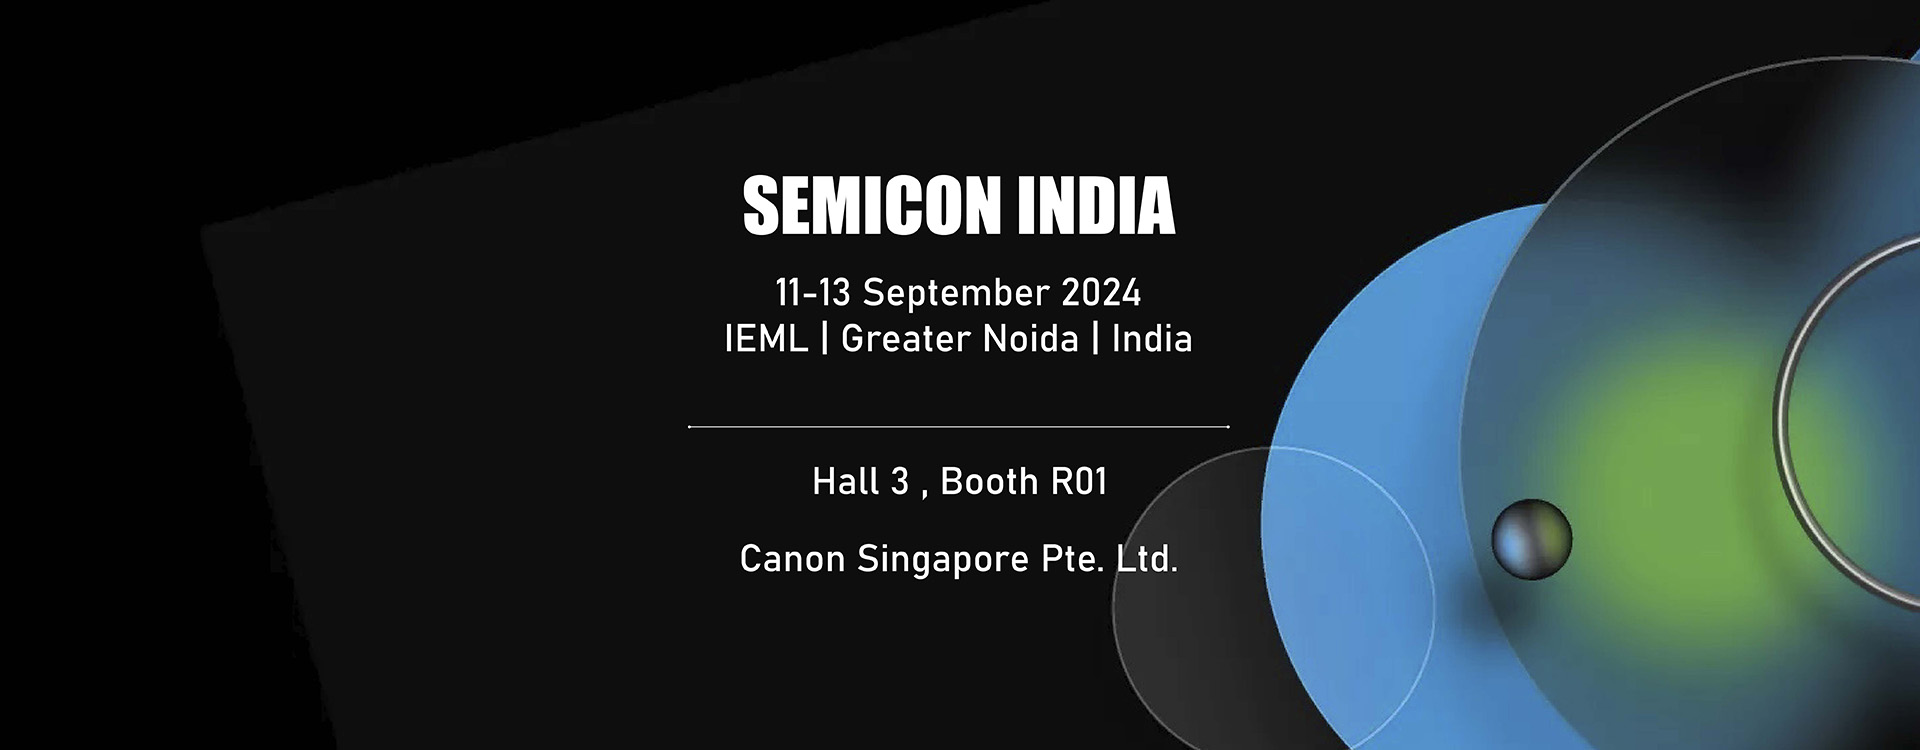 Semicon_India_2024_1920x750_v2